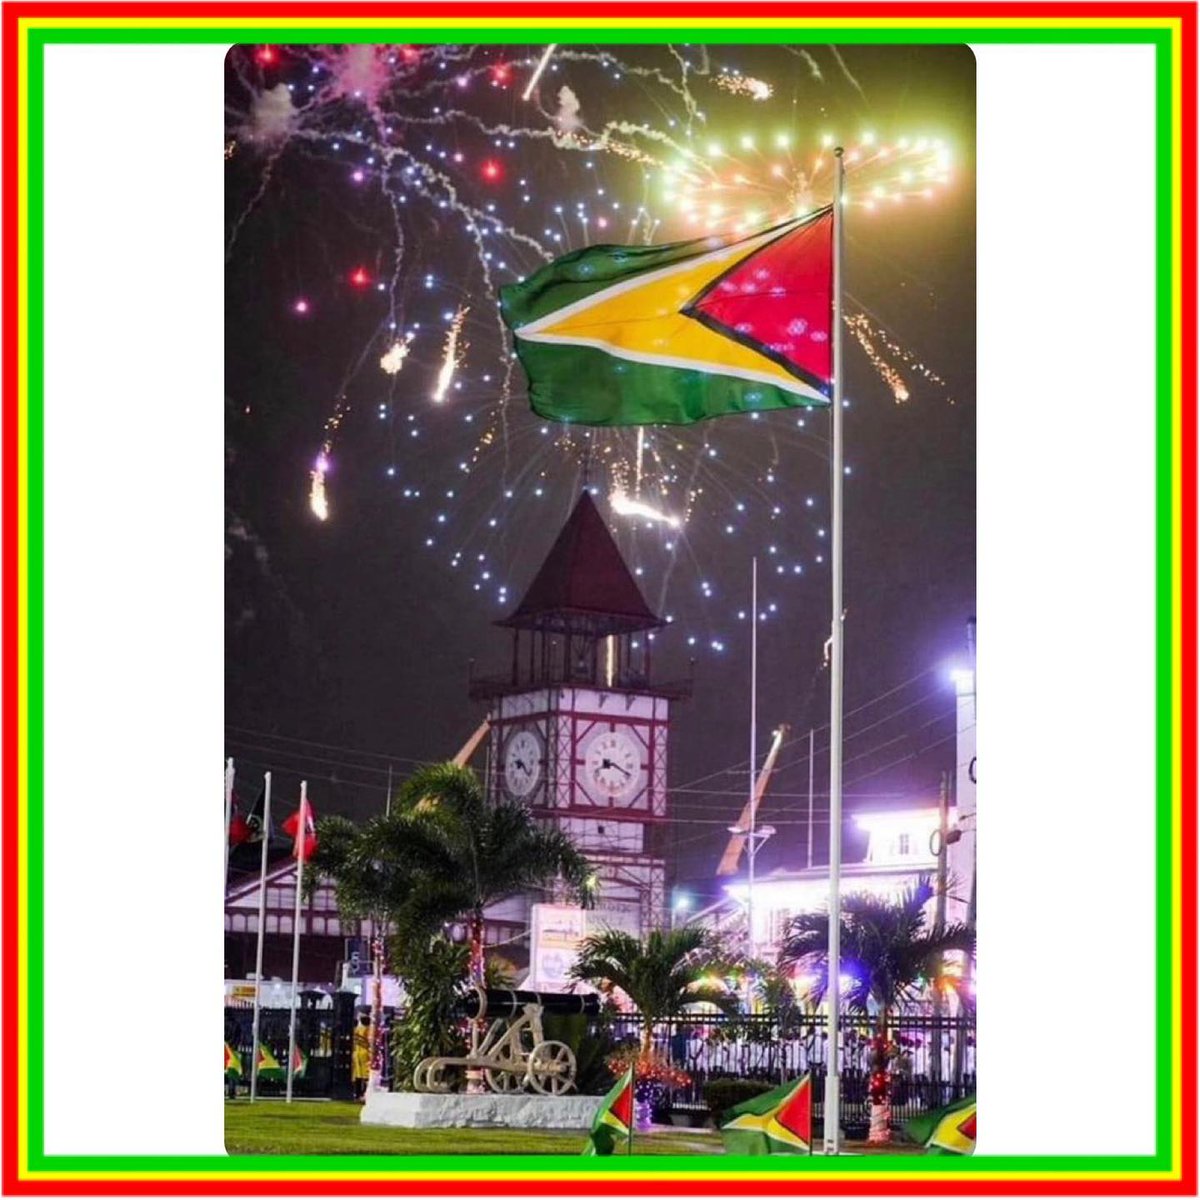 🙌🏽HAPPY MASHRAMANI/ GUYANA 🇬🇾 REPUBLIC DAY! ⓦ🏝〽️ TAG@⤵️ A Guyanese 
#guyanarepublicday #republicday #guyana #mashramani 
.
.
.
🙂 HOME 🏠 OF THE 🏝️CARIBBEAN